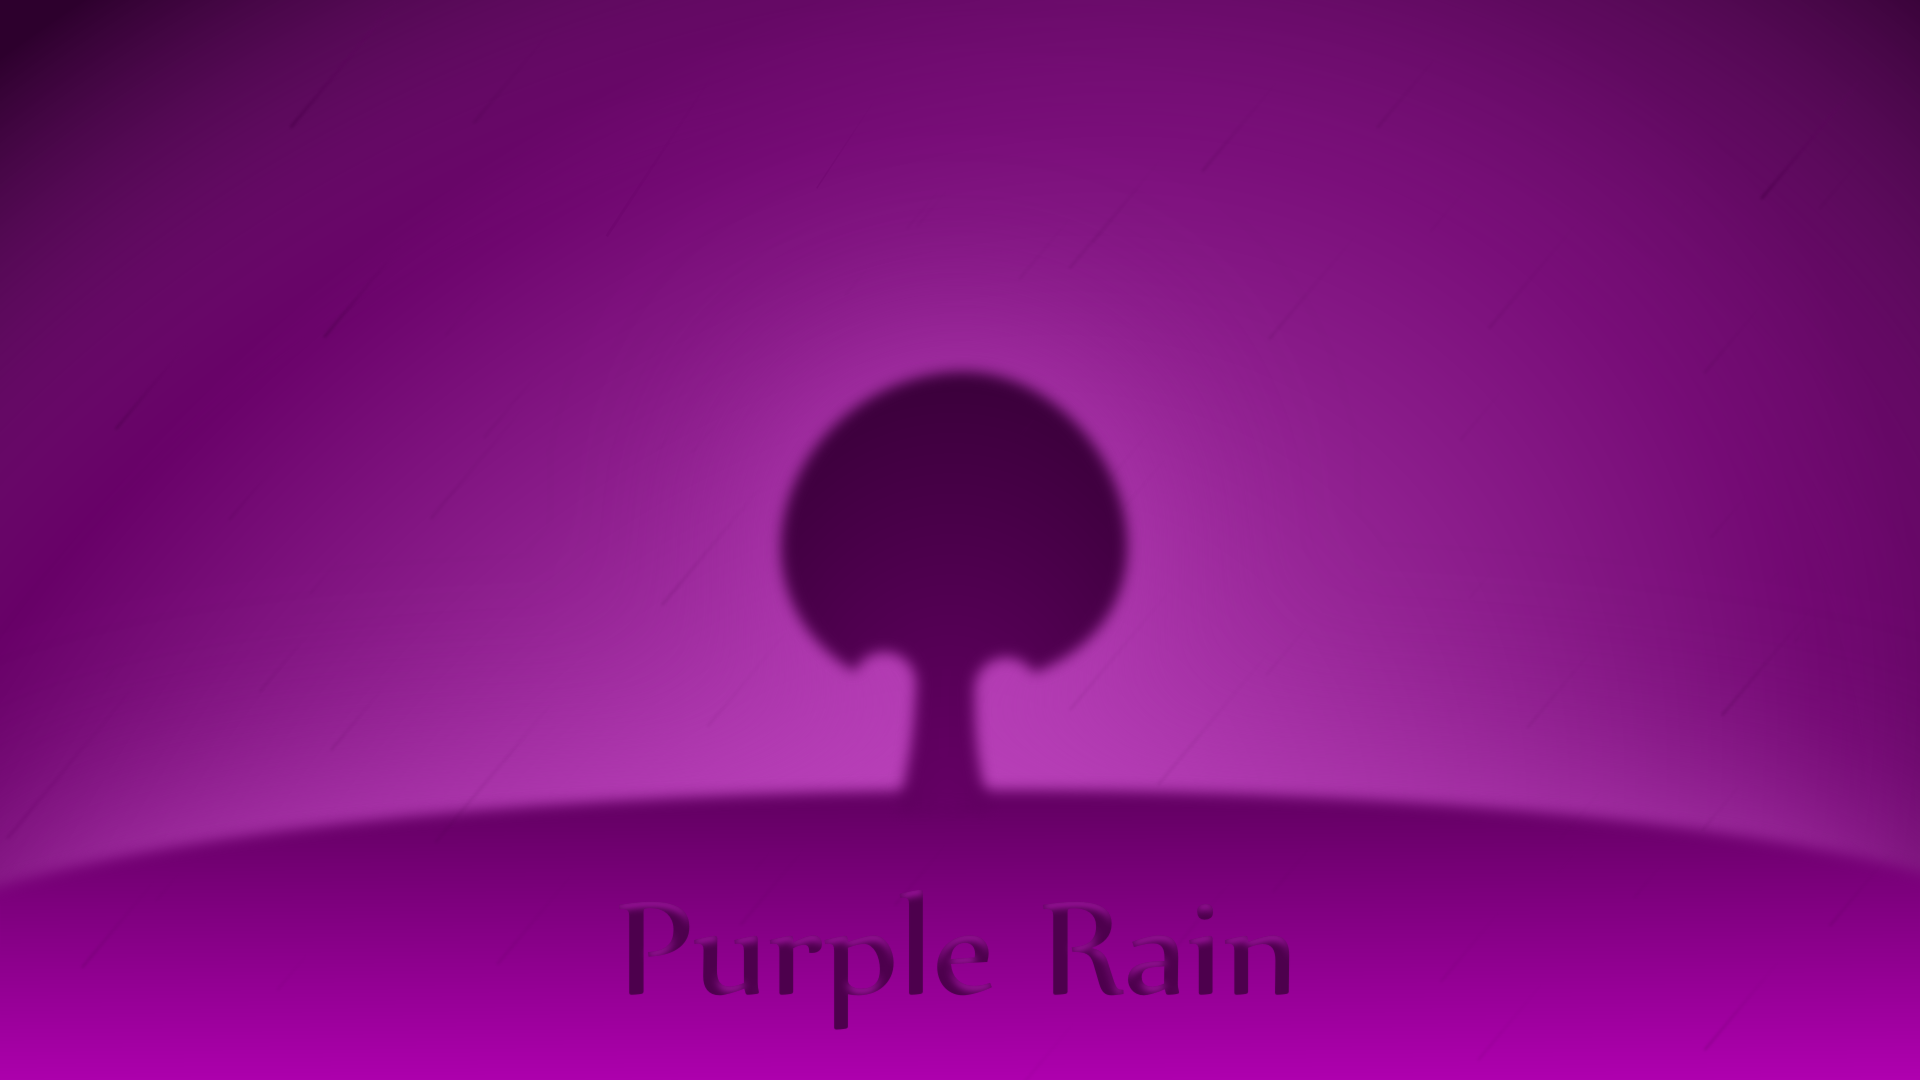 Purple Rain FULL HD by kartine29 on DeviantArt